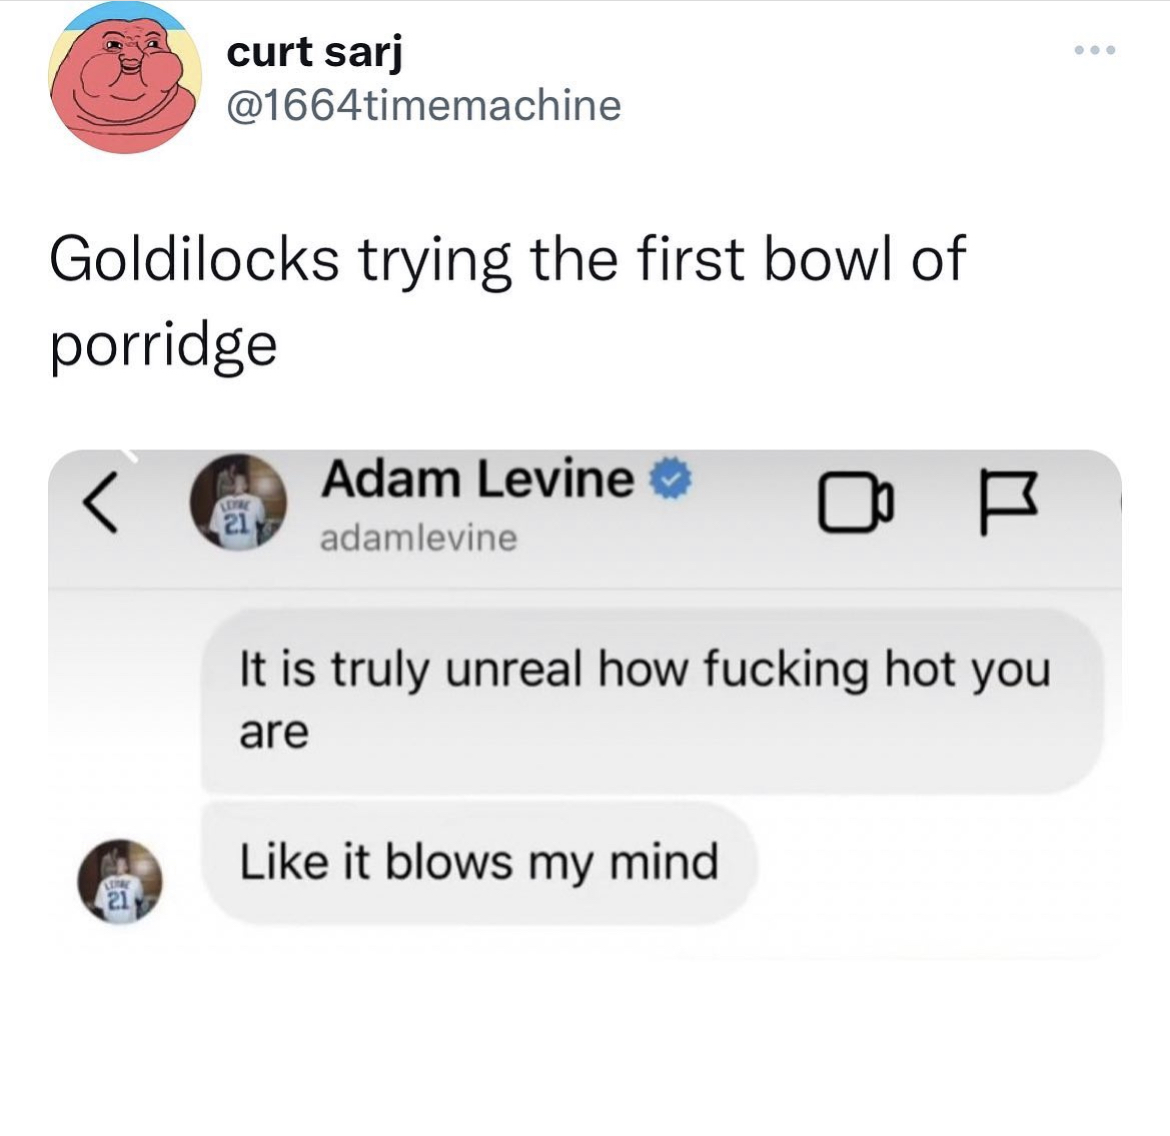 Adam Levine Sexting memes - Adam Levine - curt sarj Goldilocks trying the first bowl of porridge Leyre 21 Adam Levine adamlevine It is truly unreal how fucking hot you are it blows my mind